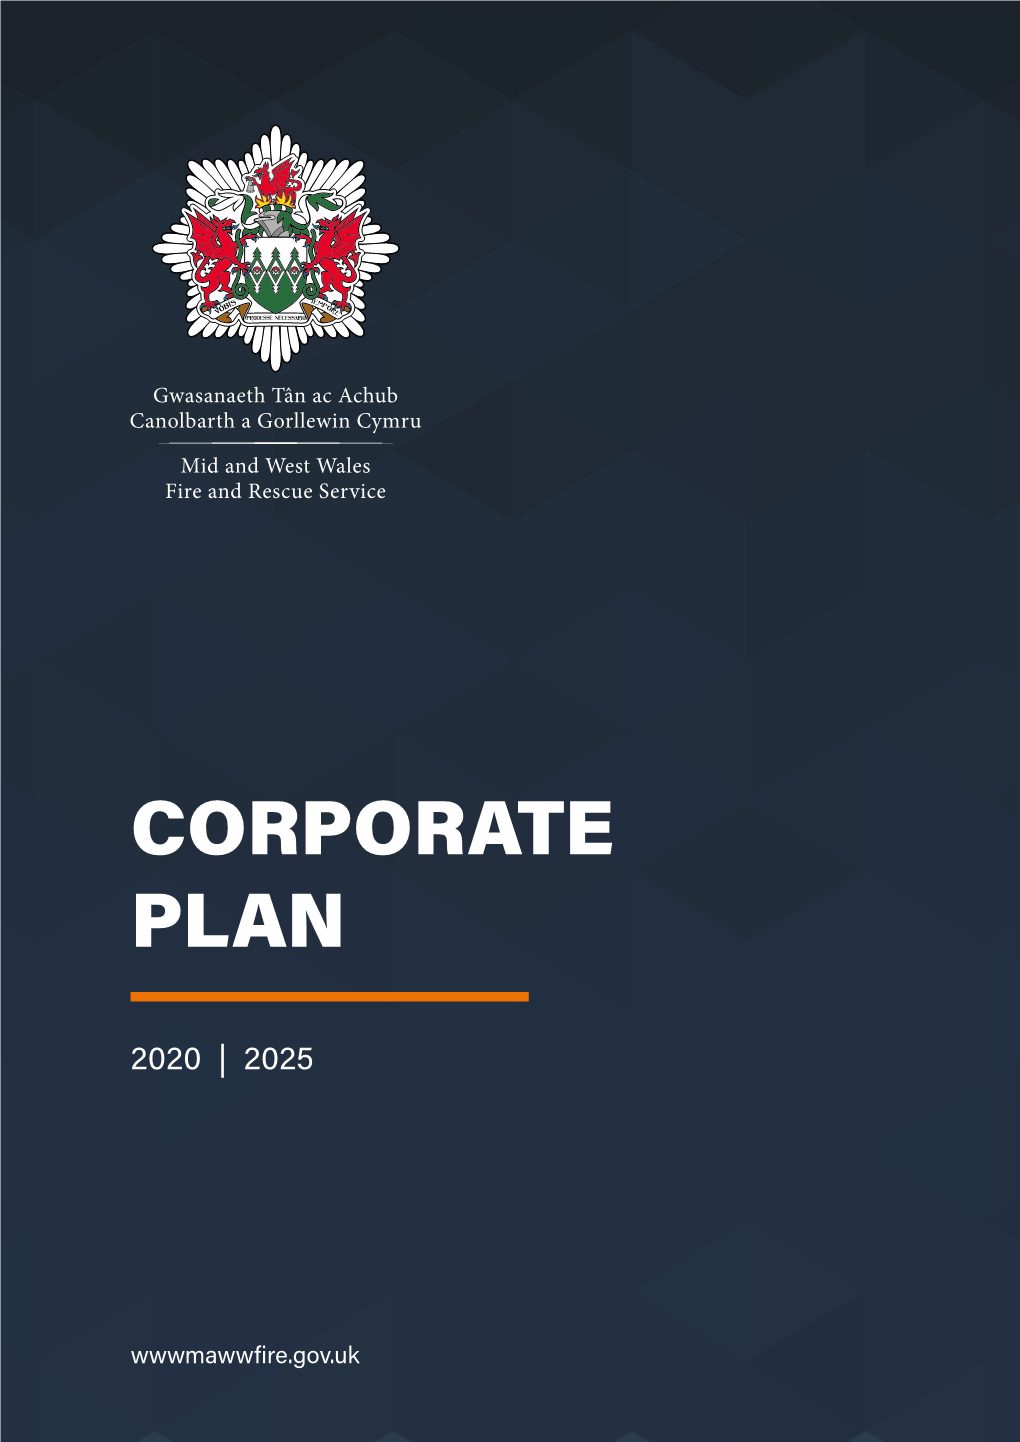 Corporate Plan